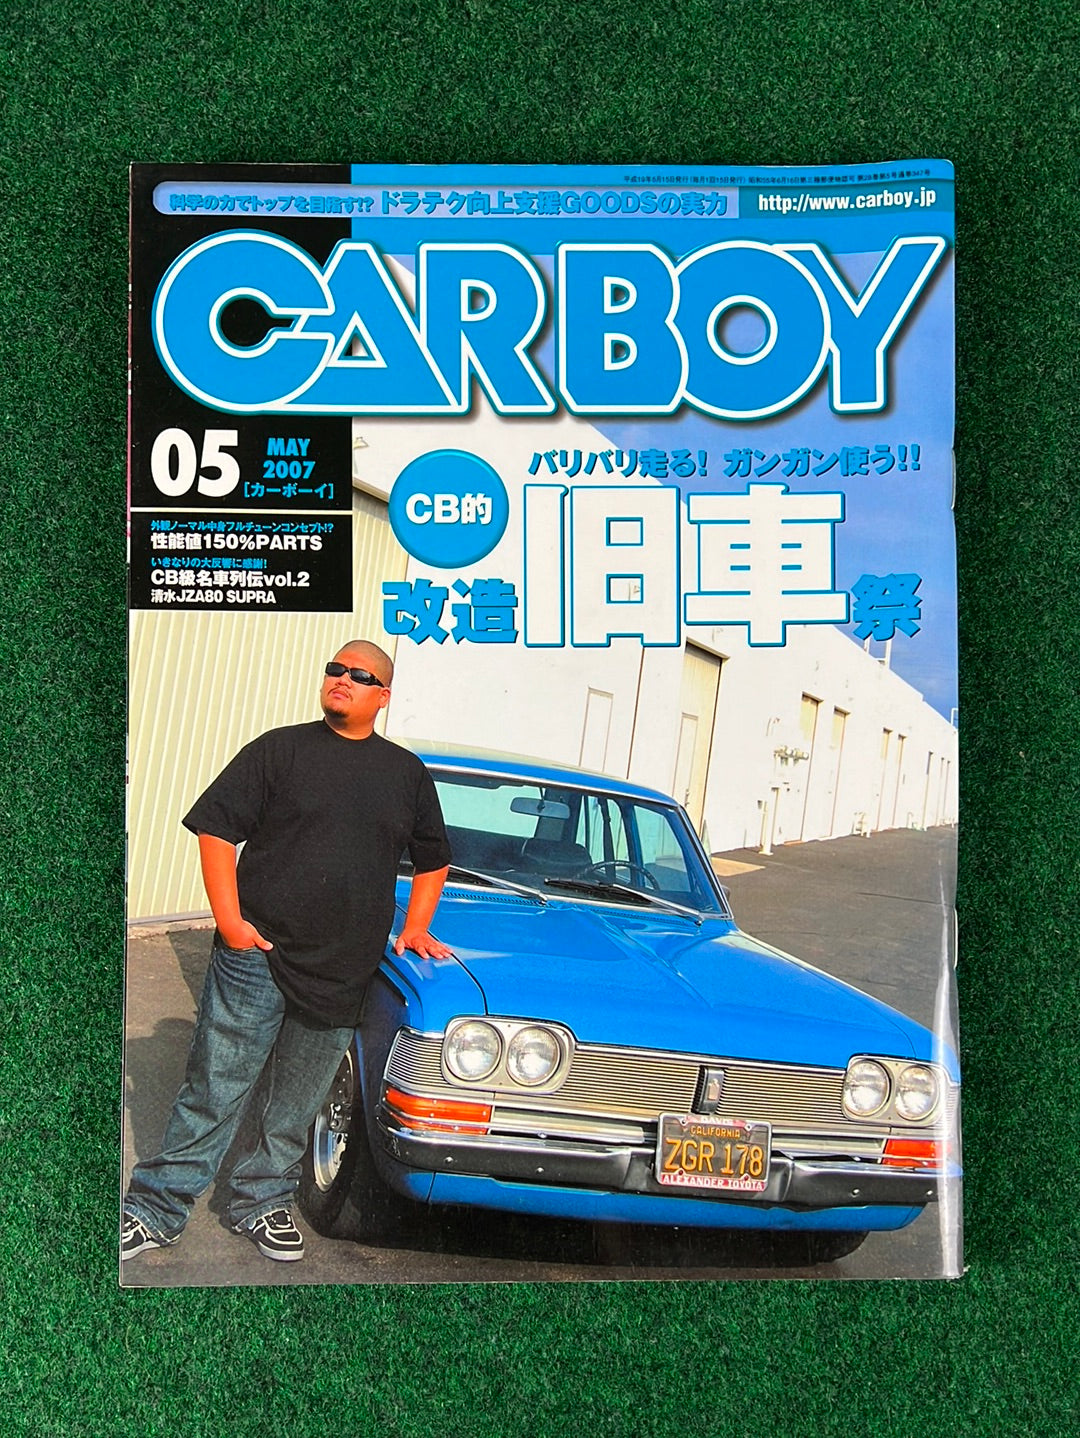 CARBOY Magazine - May 2007